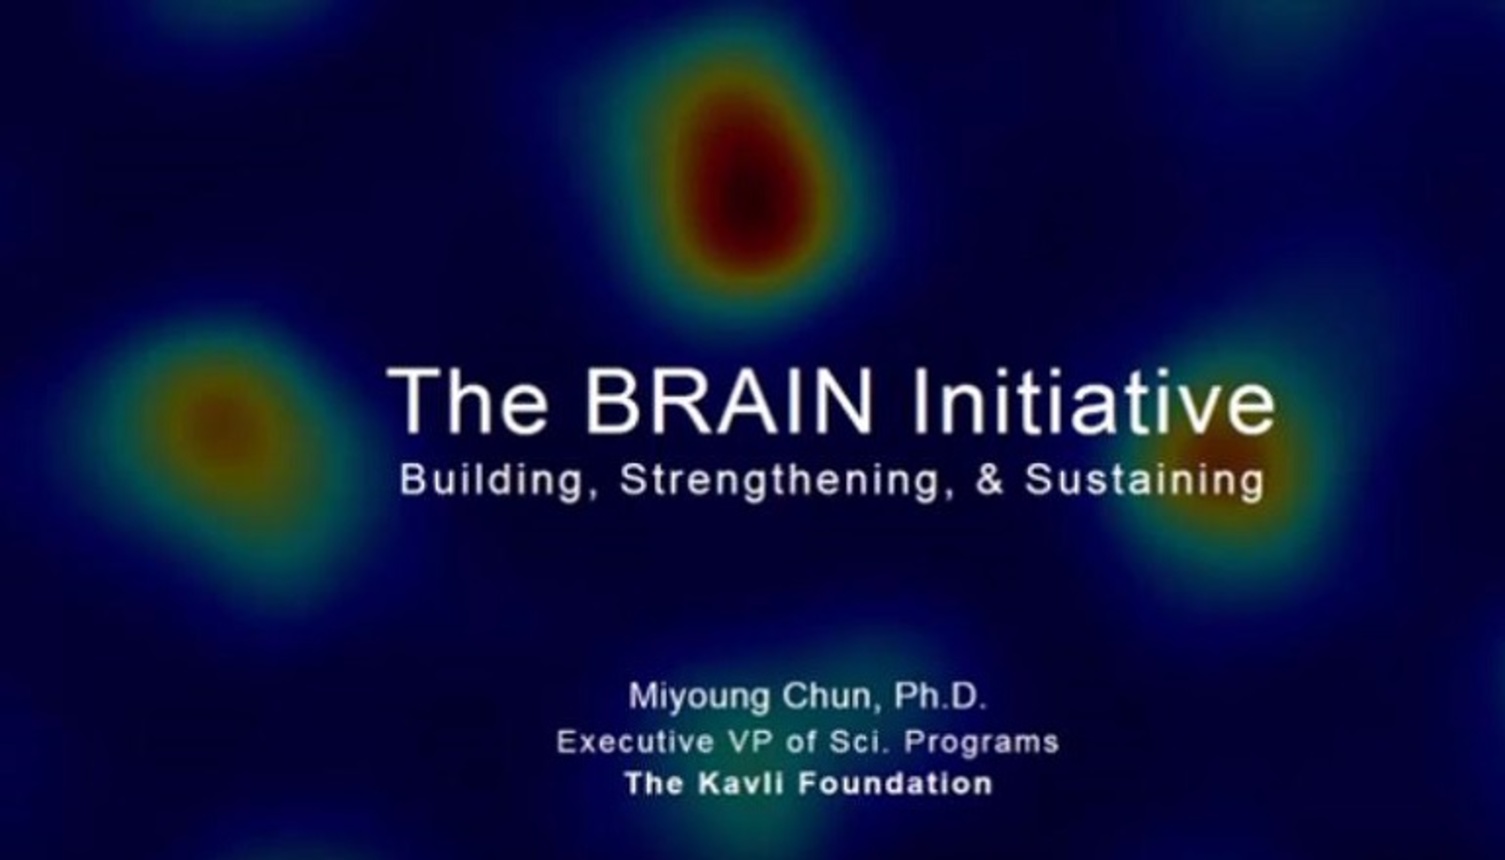 The BRAIN Initiative: Building, Strengthening, & Sustaining